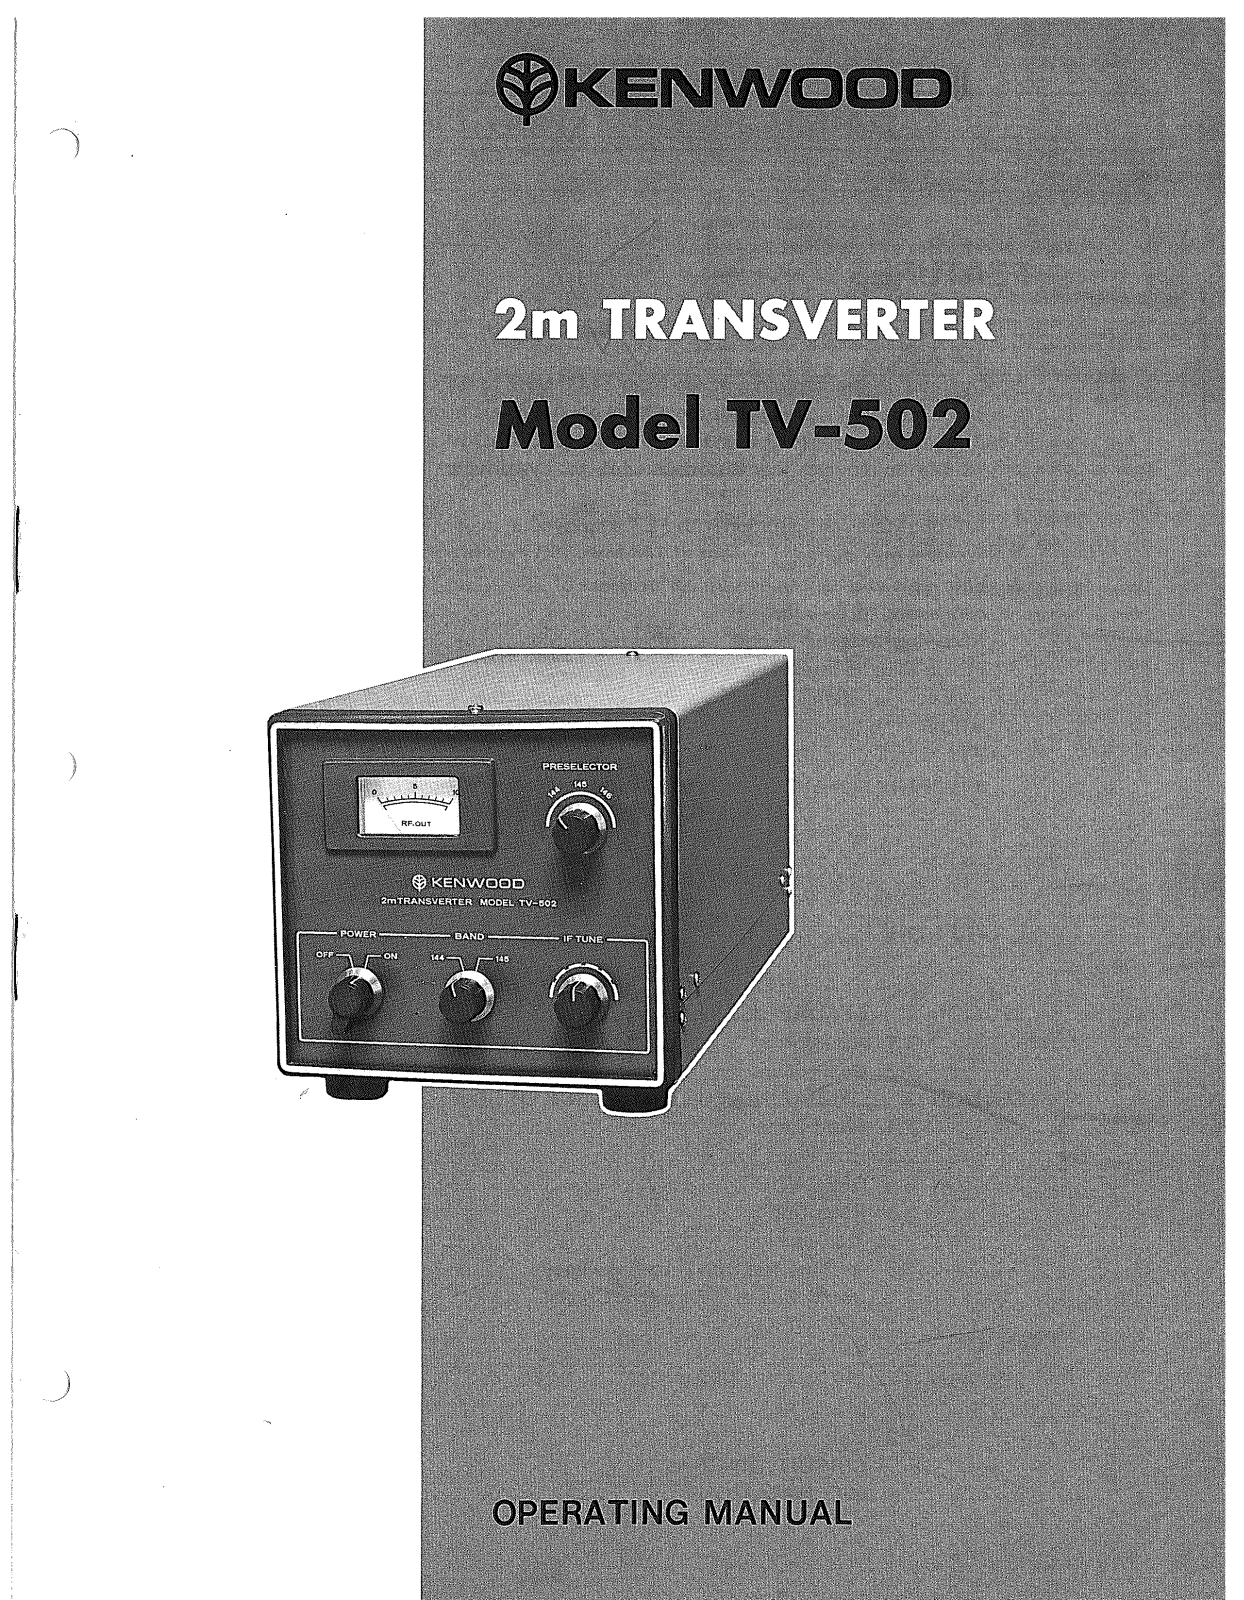 Kenwood TV-502 User Manual